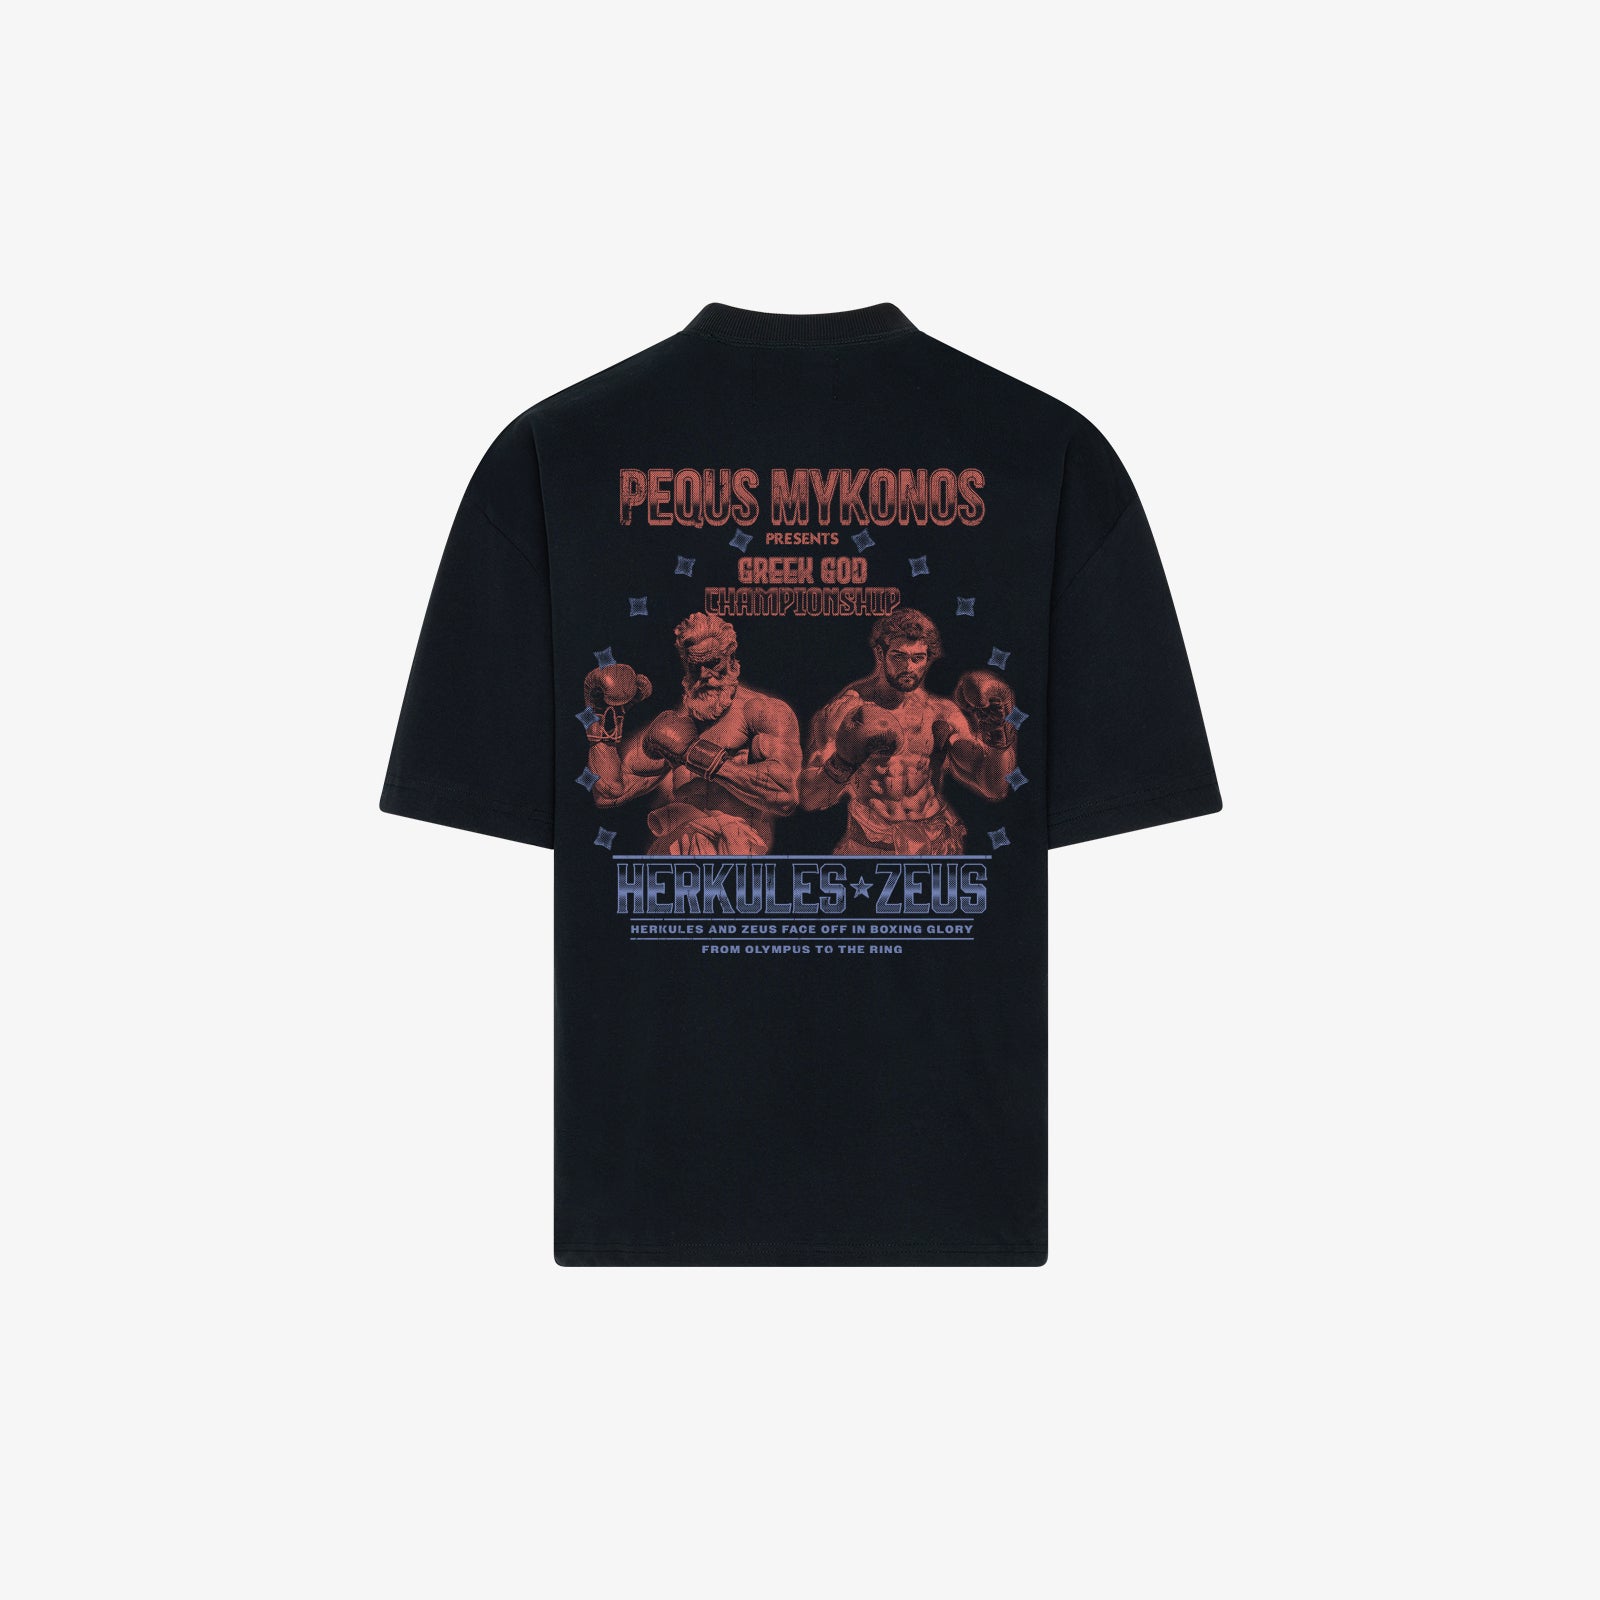 Fight Night T-Shirt